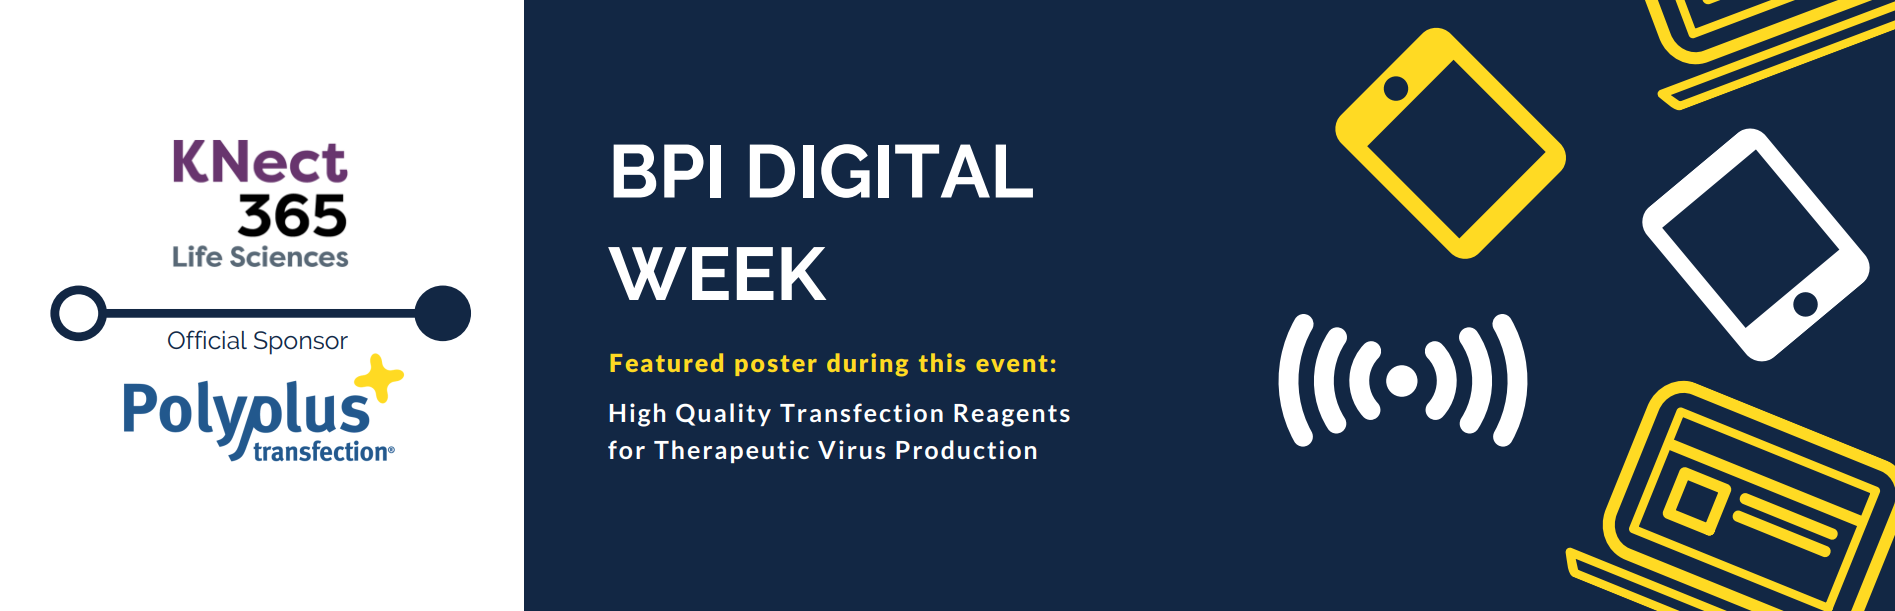 BPI Digital Week